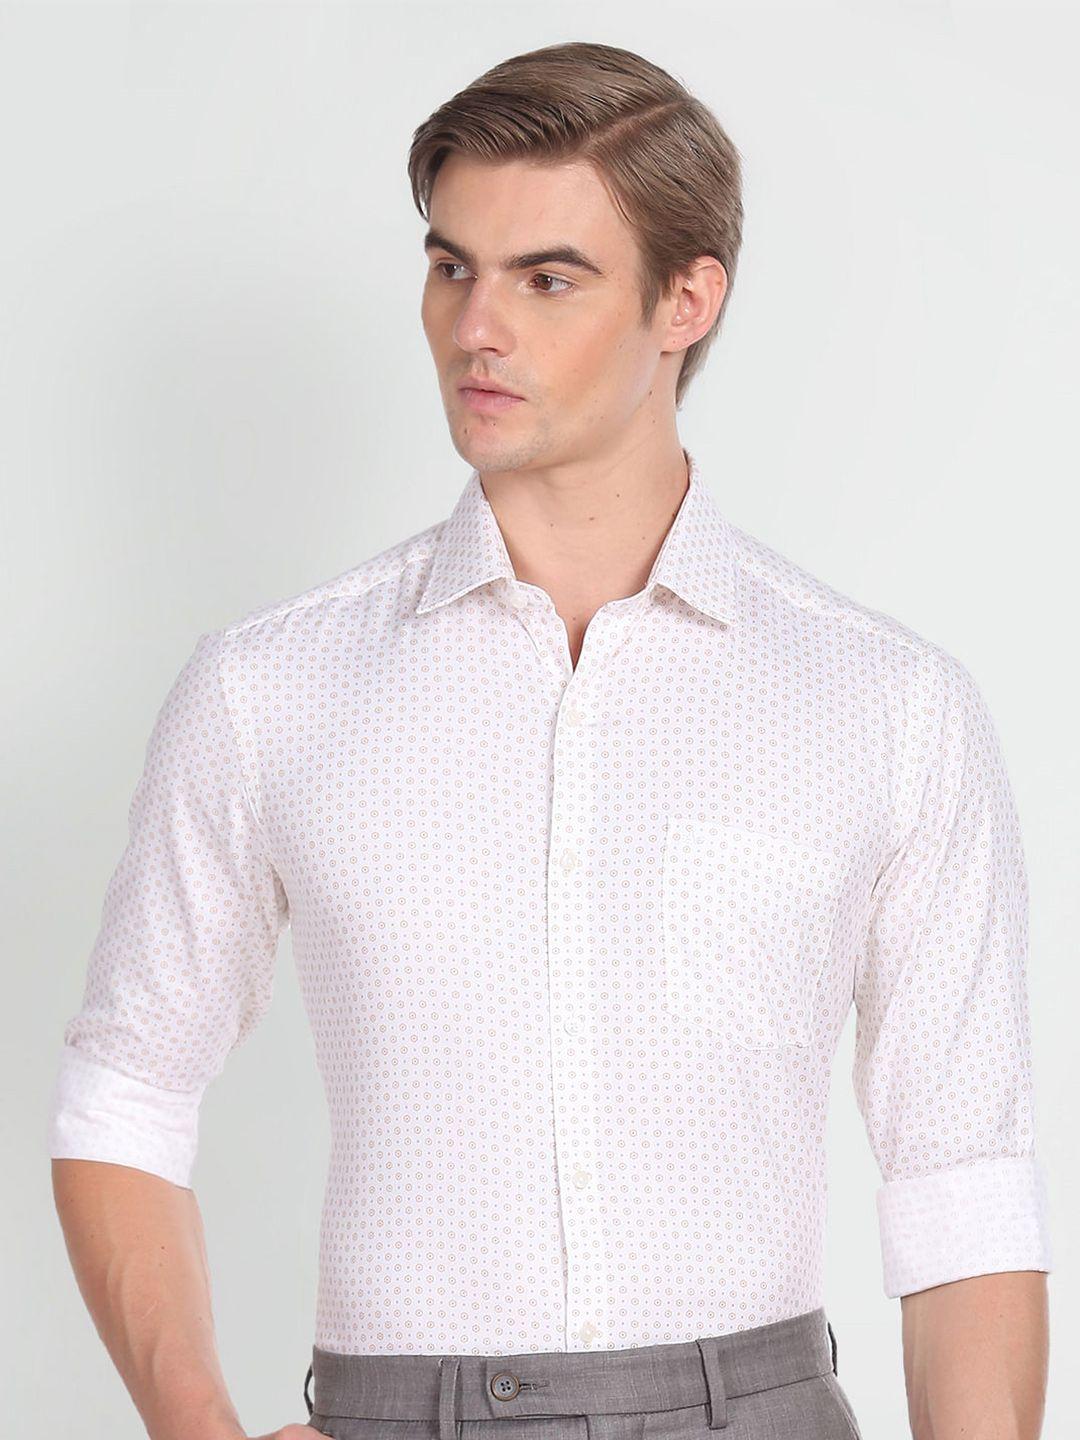 arrow micro ditsy printed spread collar pure cotton slim fit casual shirt